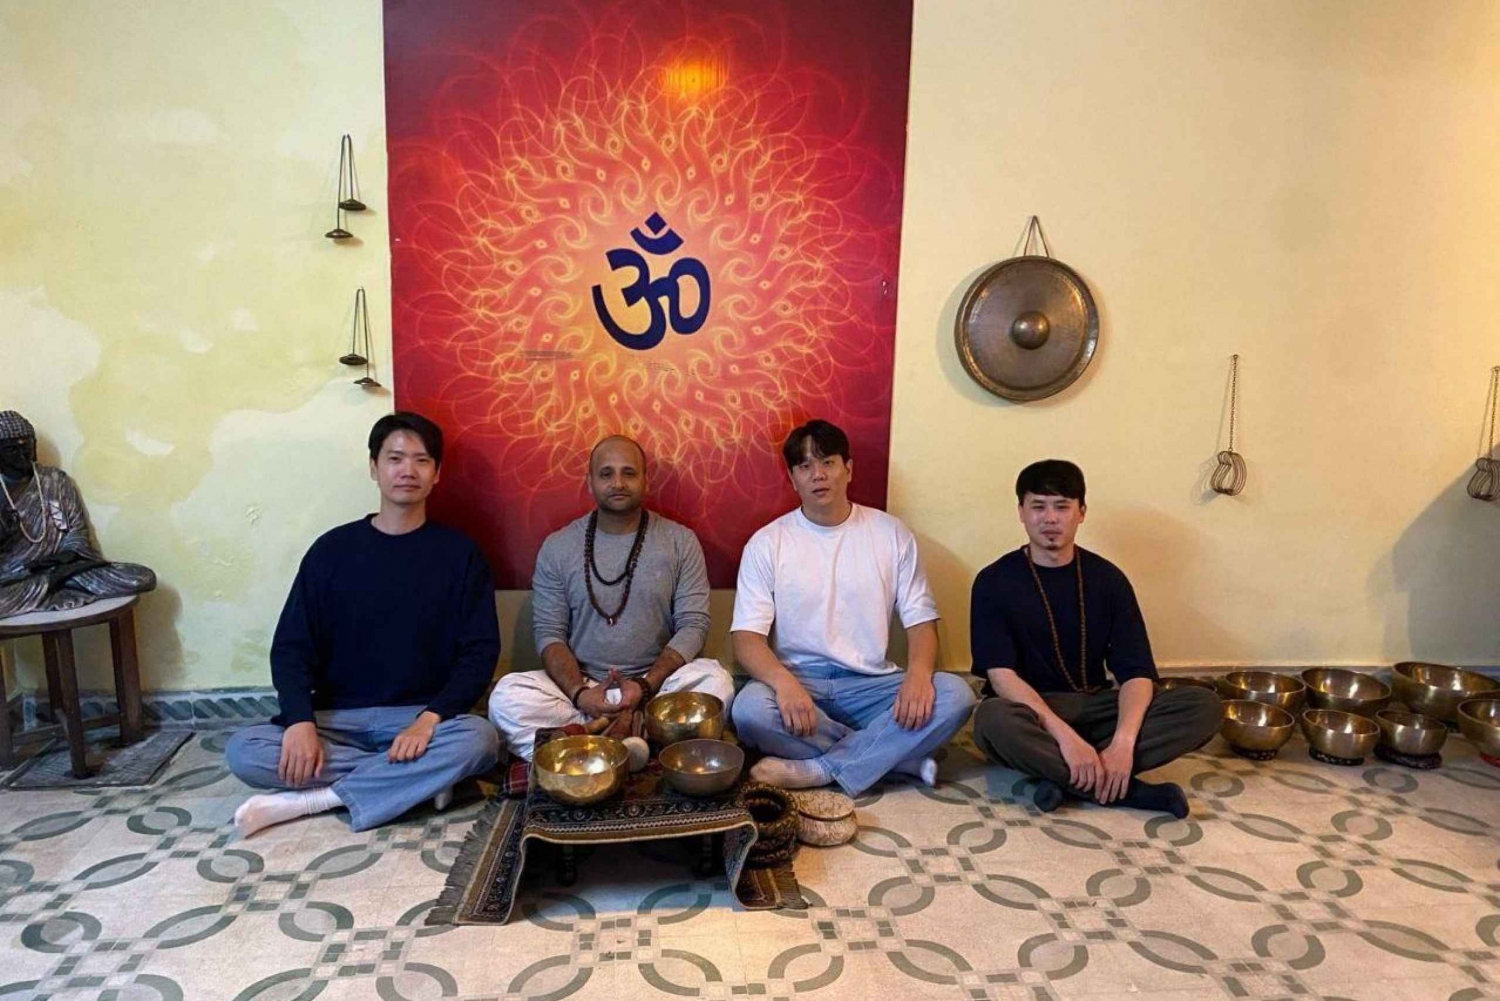 Jaipur: Indyjskie Starożytne Centrum Medytacji i Jogi